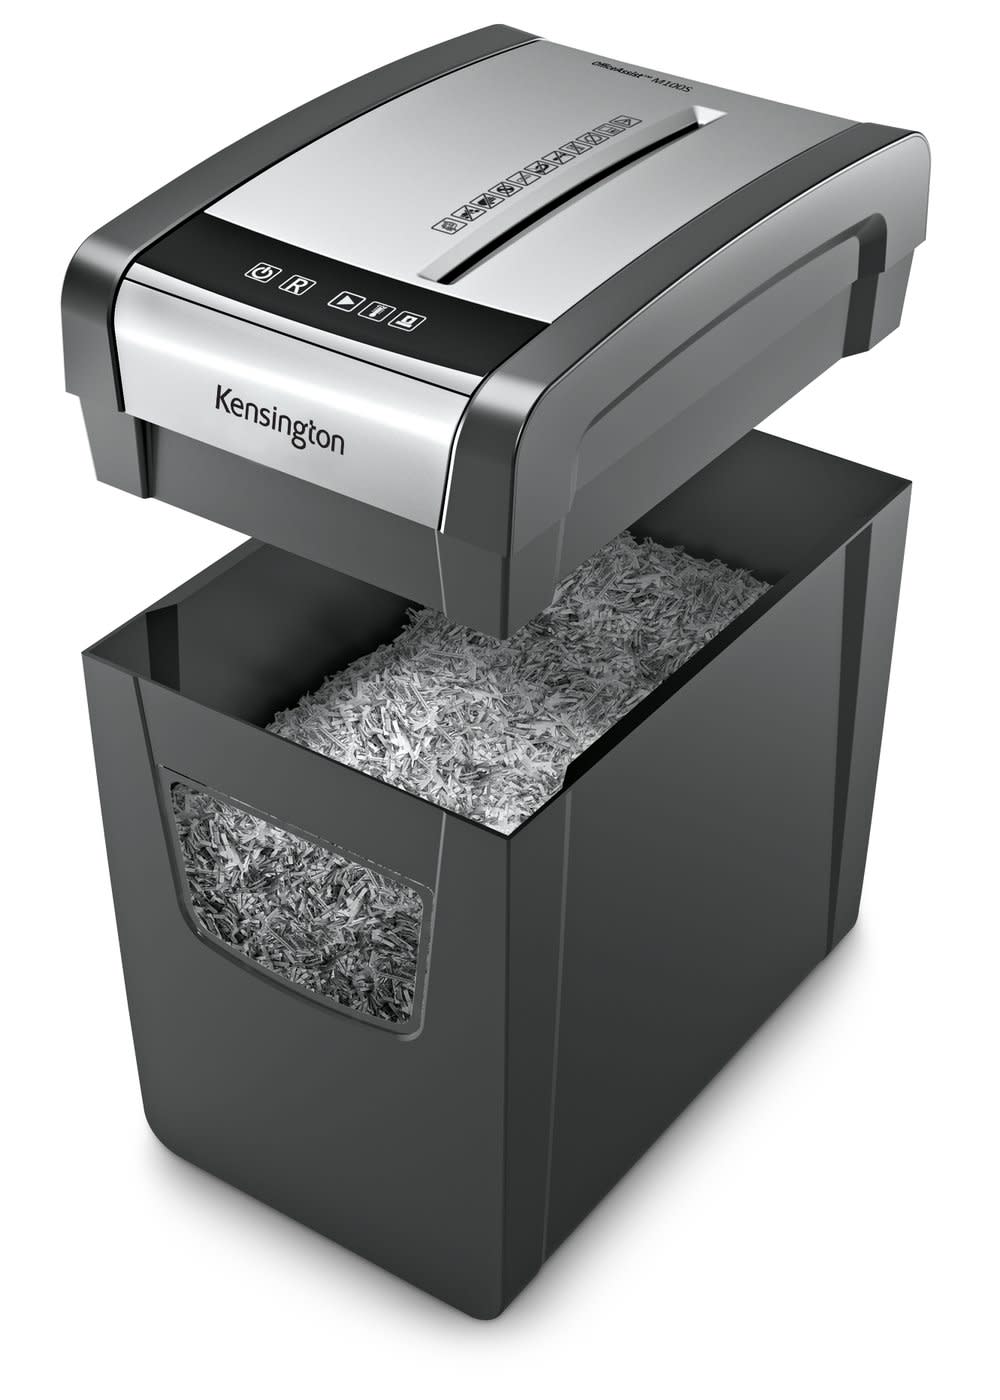 Kensington Office Assist M100s Anti-Jam Cross Cut Shredder - K52076AM Used